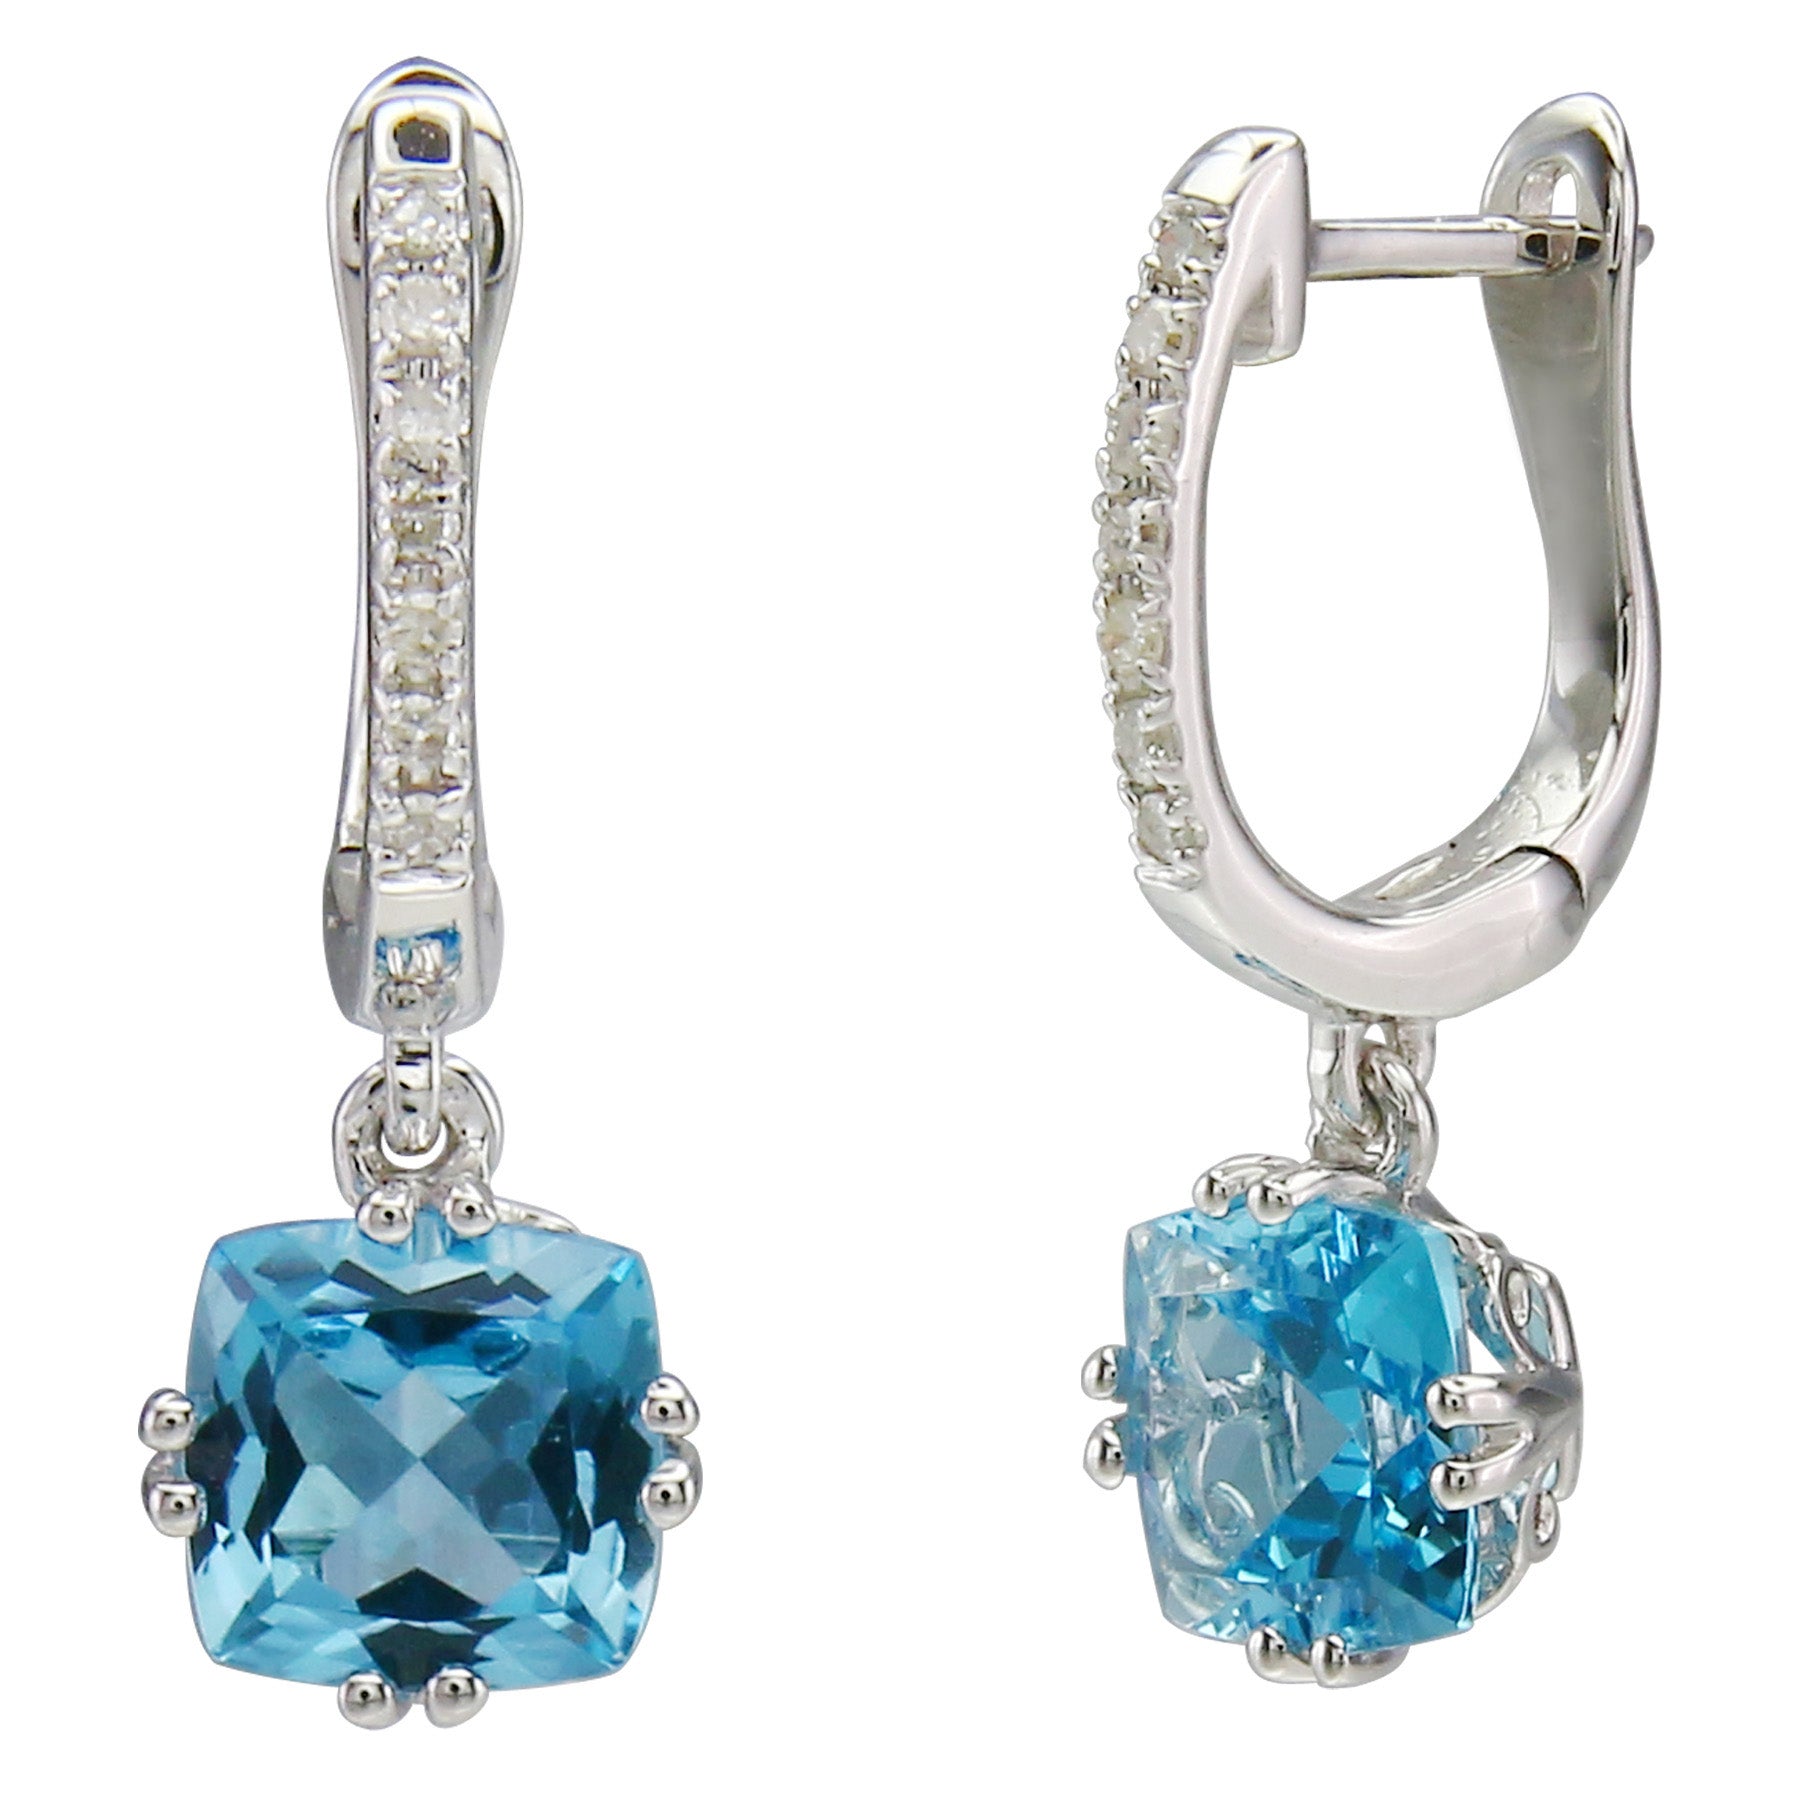 Diamond2Deal 14k White Gold 1.86ct Cushion Cut Blue Topaz and Diamond Drop & Dangle Earrings